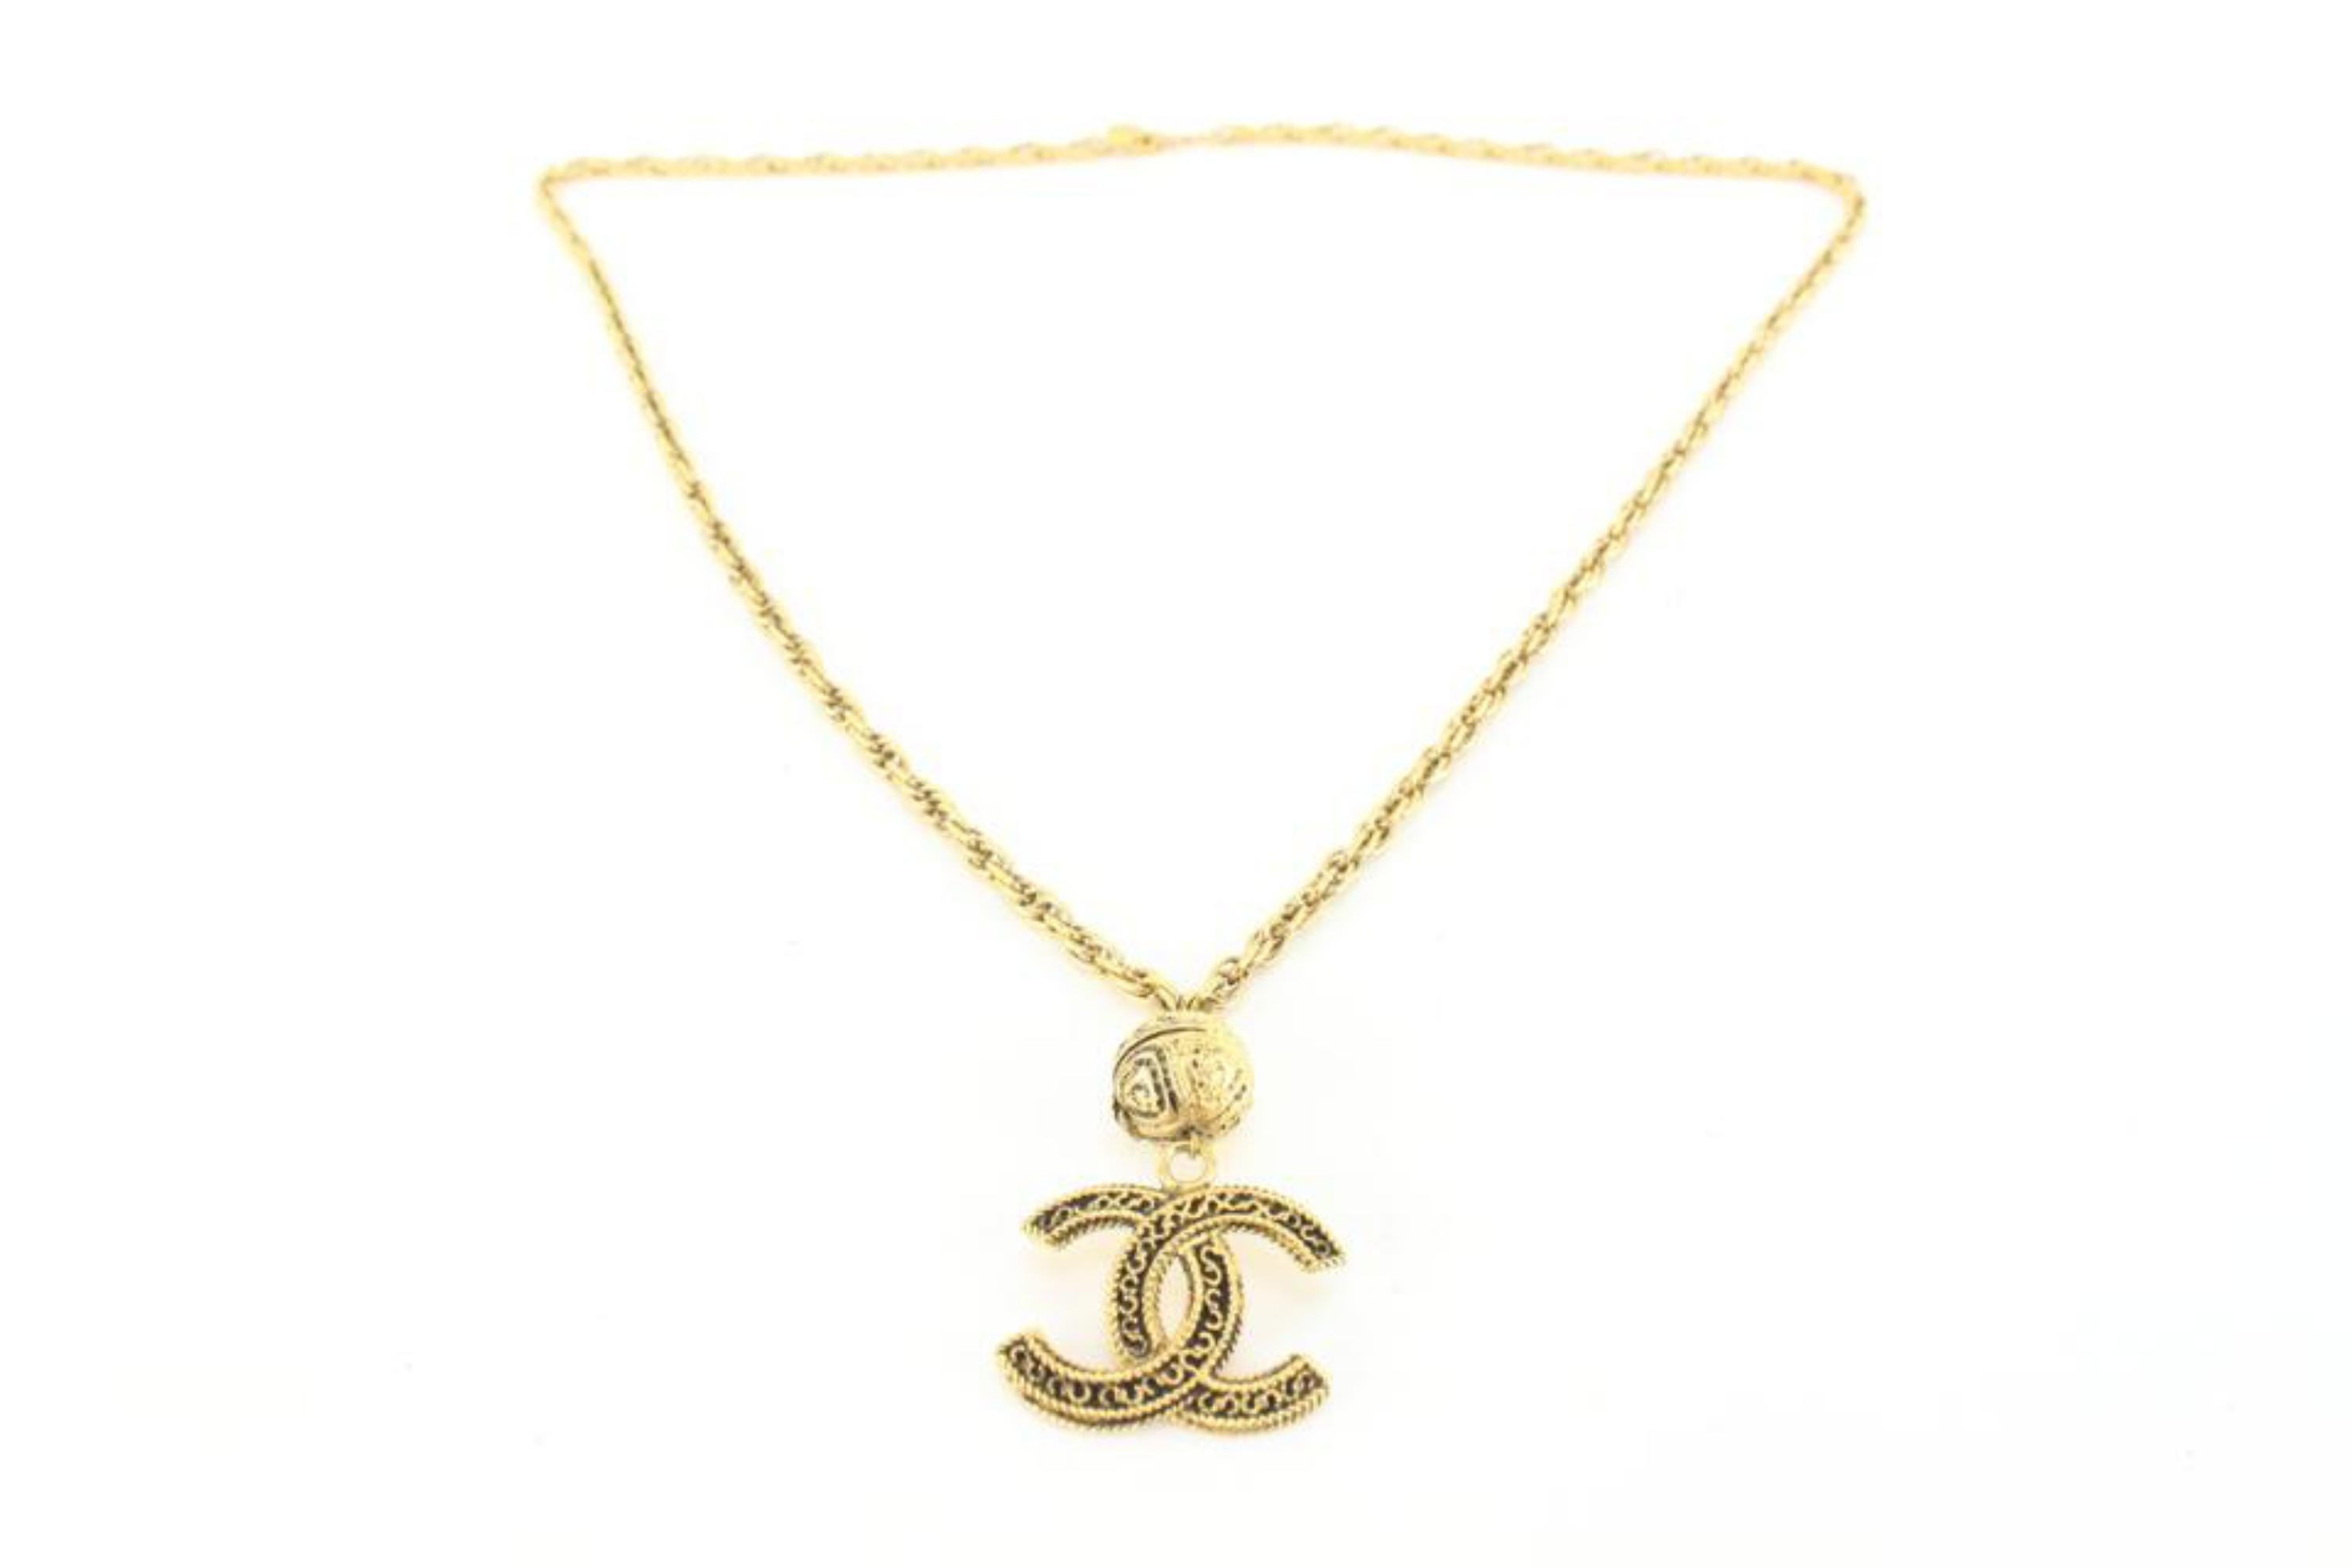 Chanel Rare 24k Gold Plated Filigree Ball CC Chain Necklace 36cc721s 7